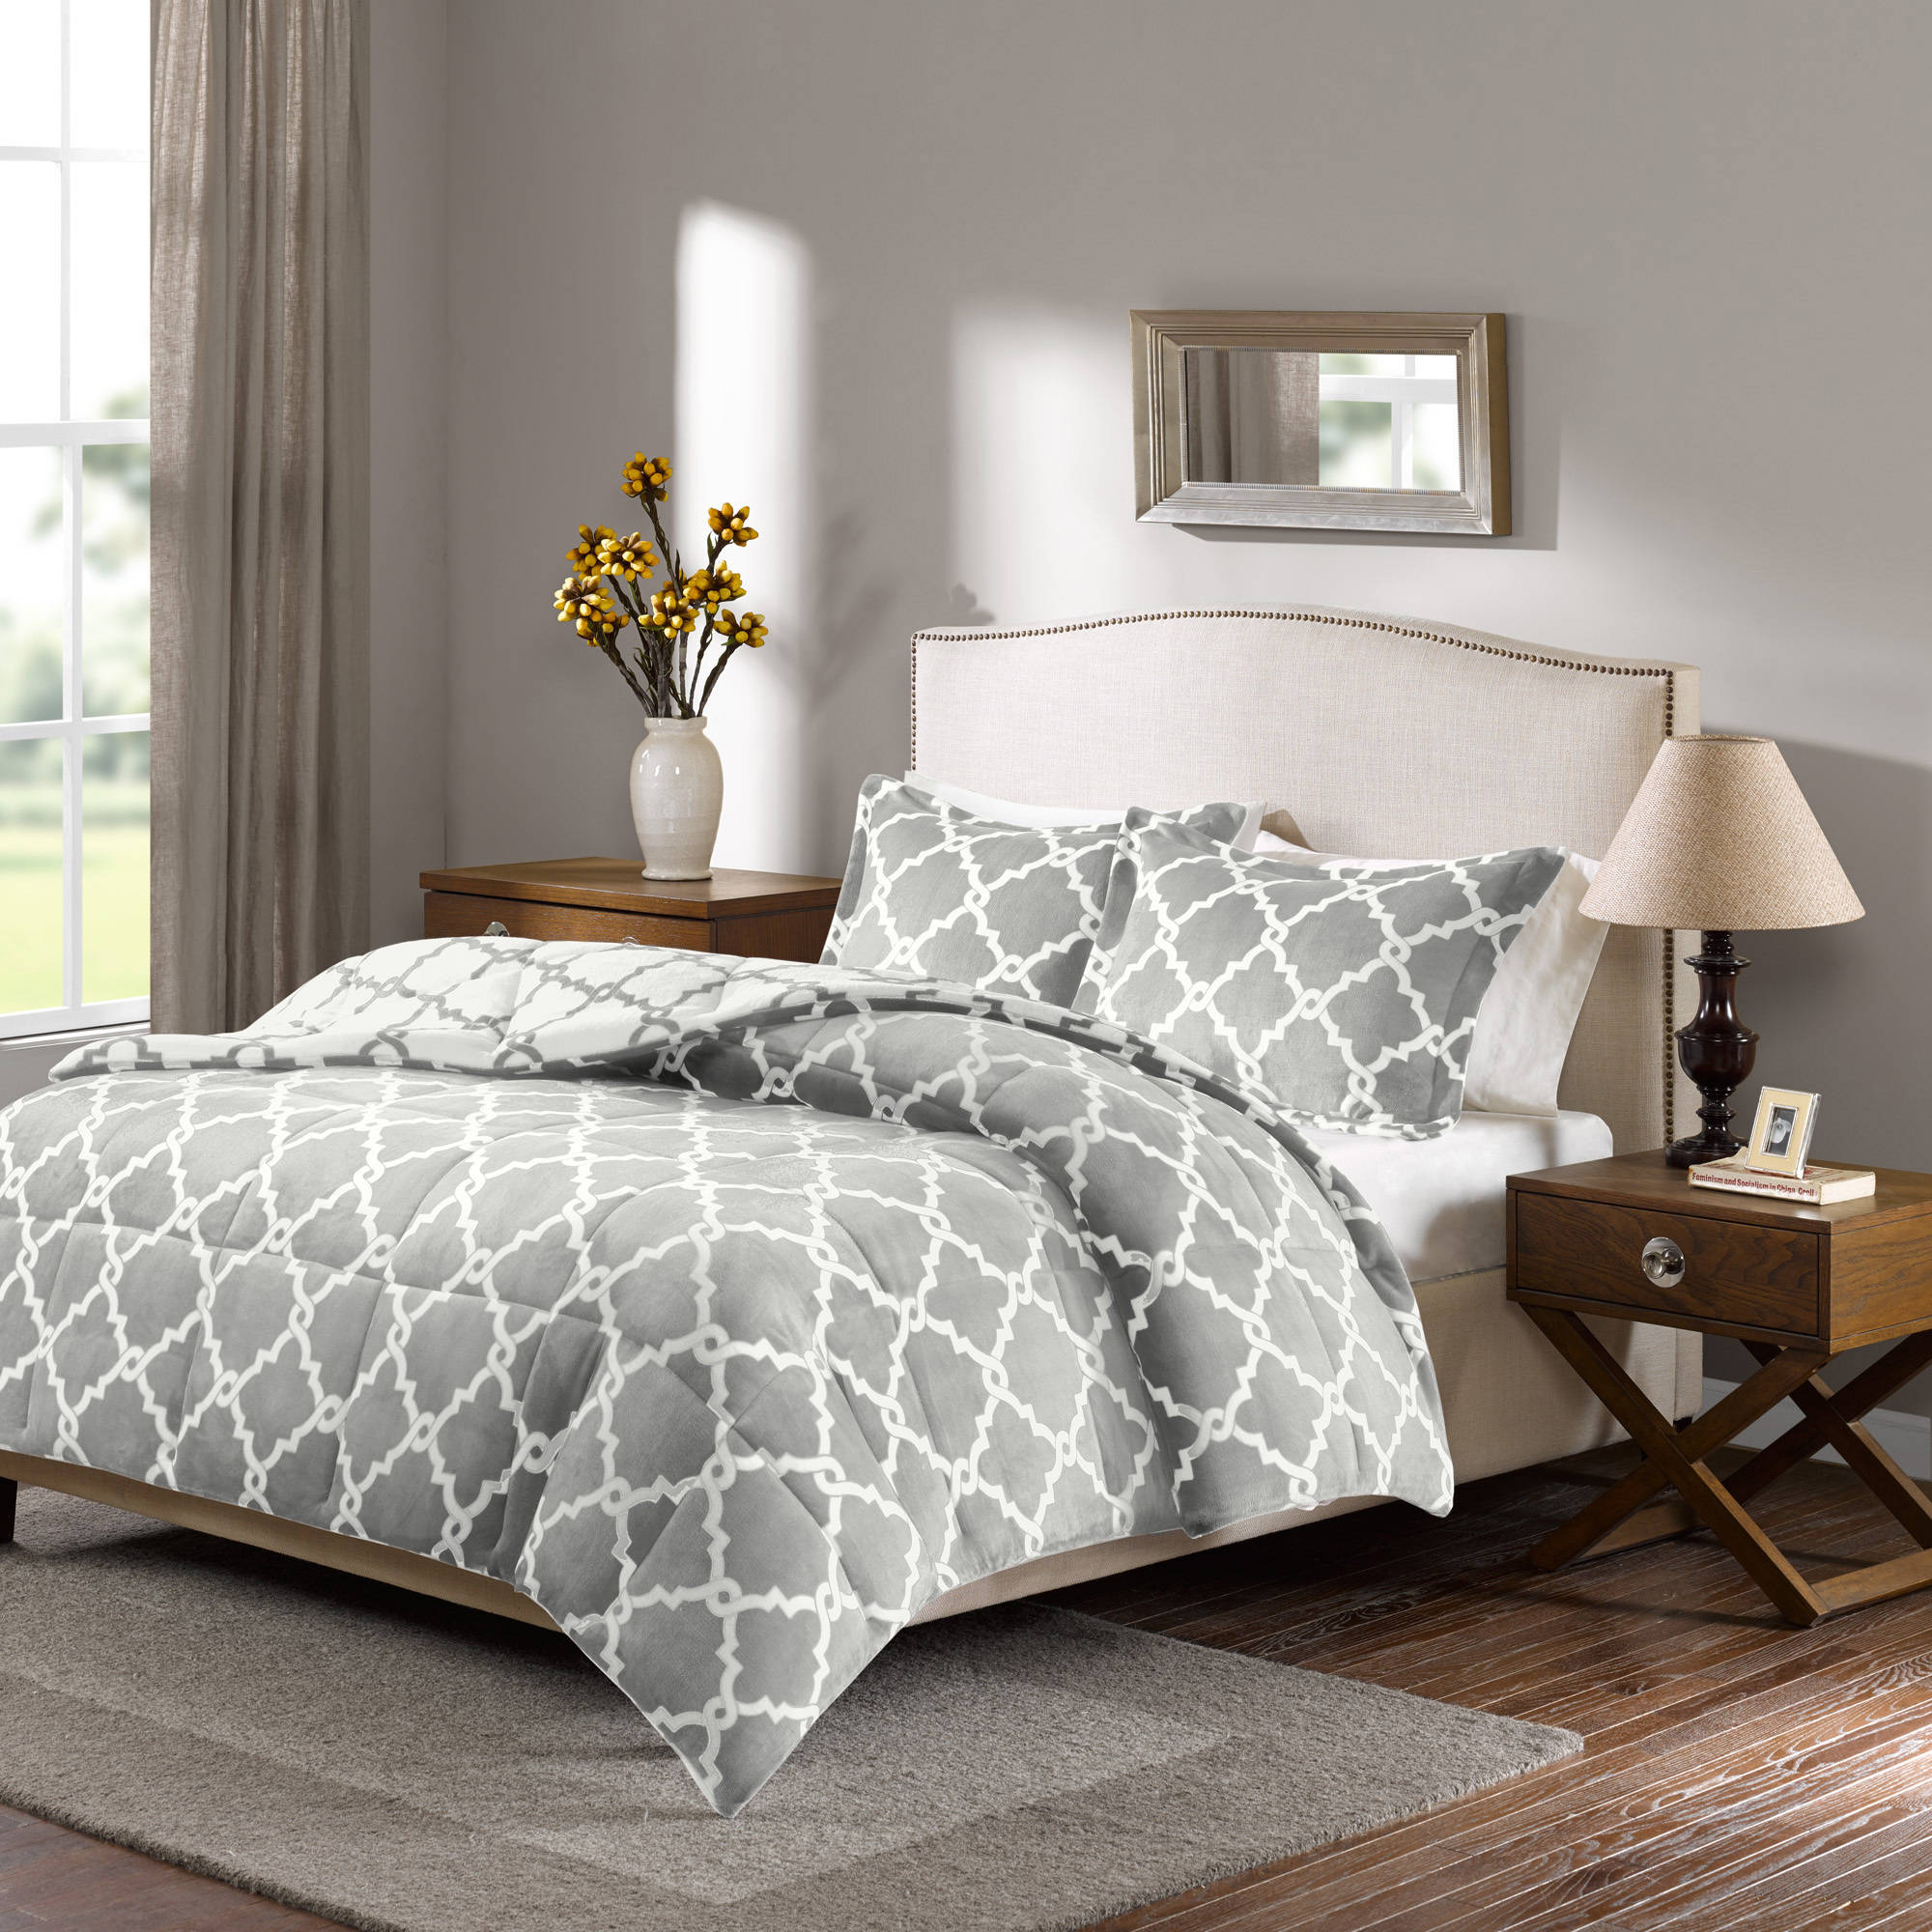 True North by Sleep Philosophy 2-Piece Grey Reversible Plush Microvelour Print Comforter Set, Twin - image 4 of 4